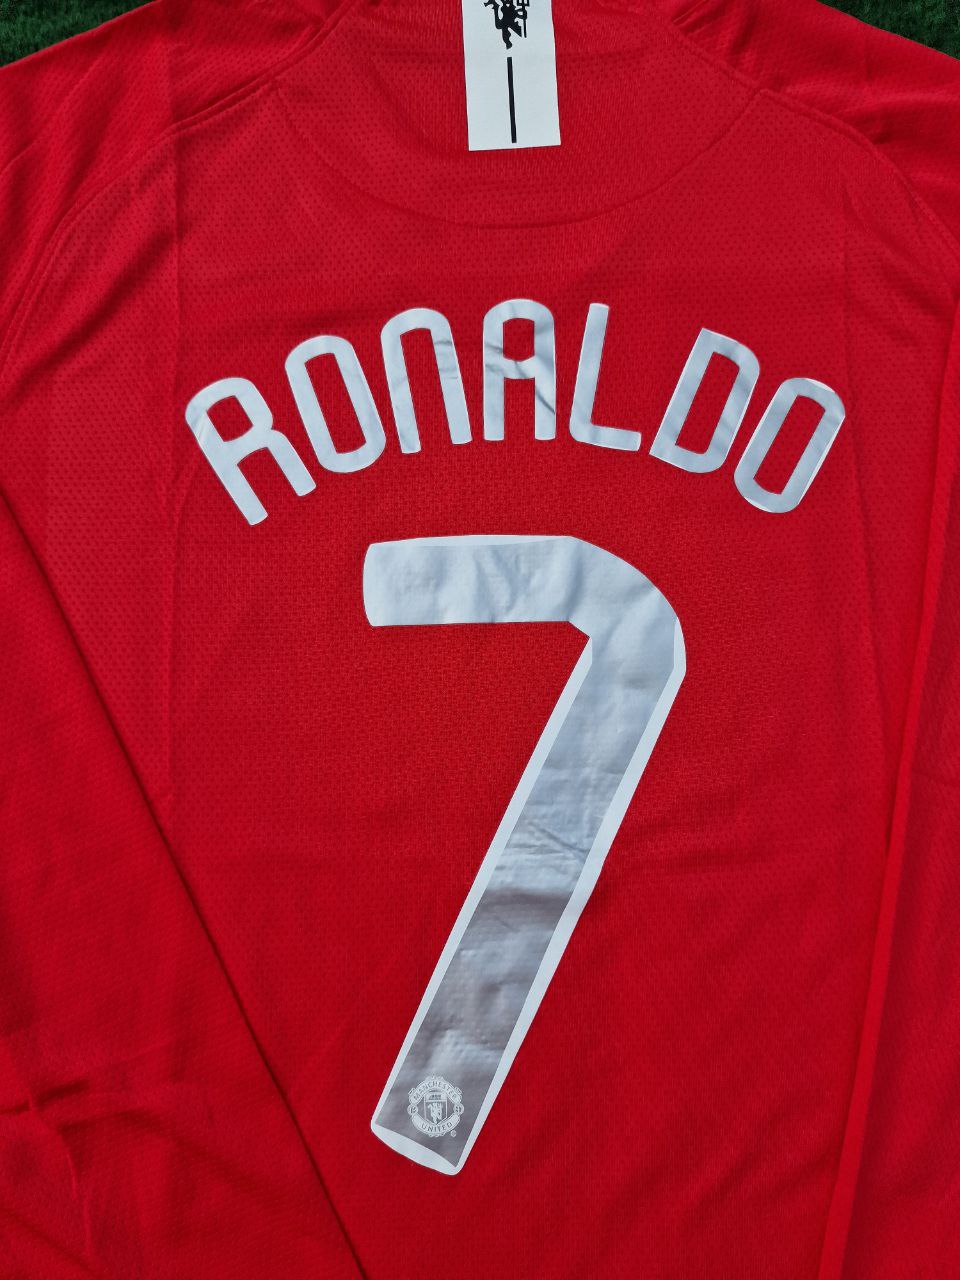 Cristiano Ronaldo Manchester United Retro Uzun Kollu Forma